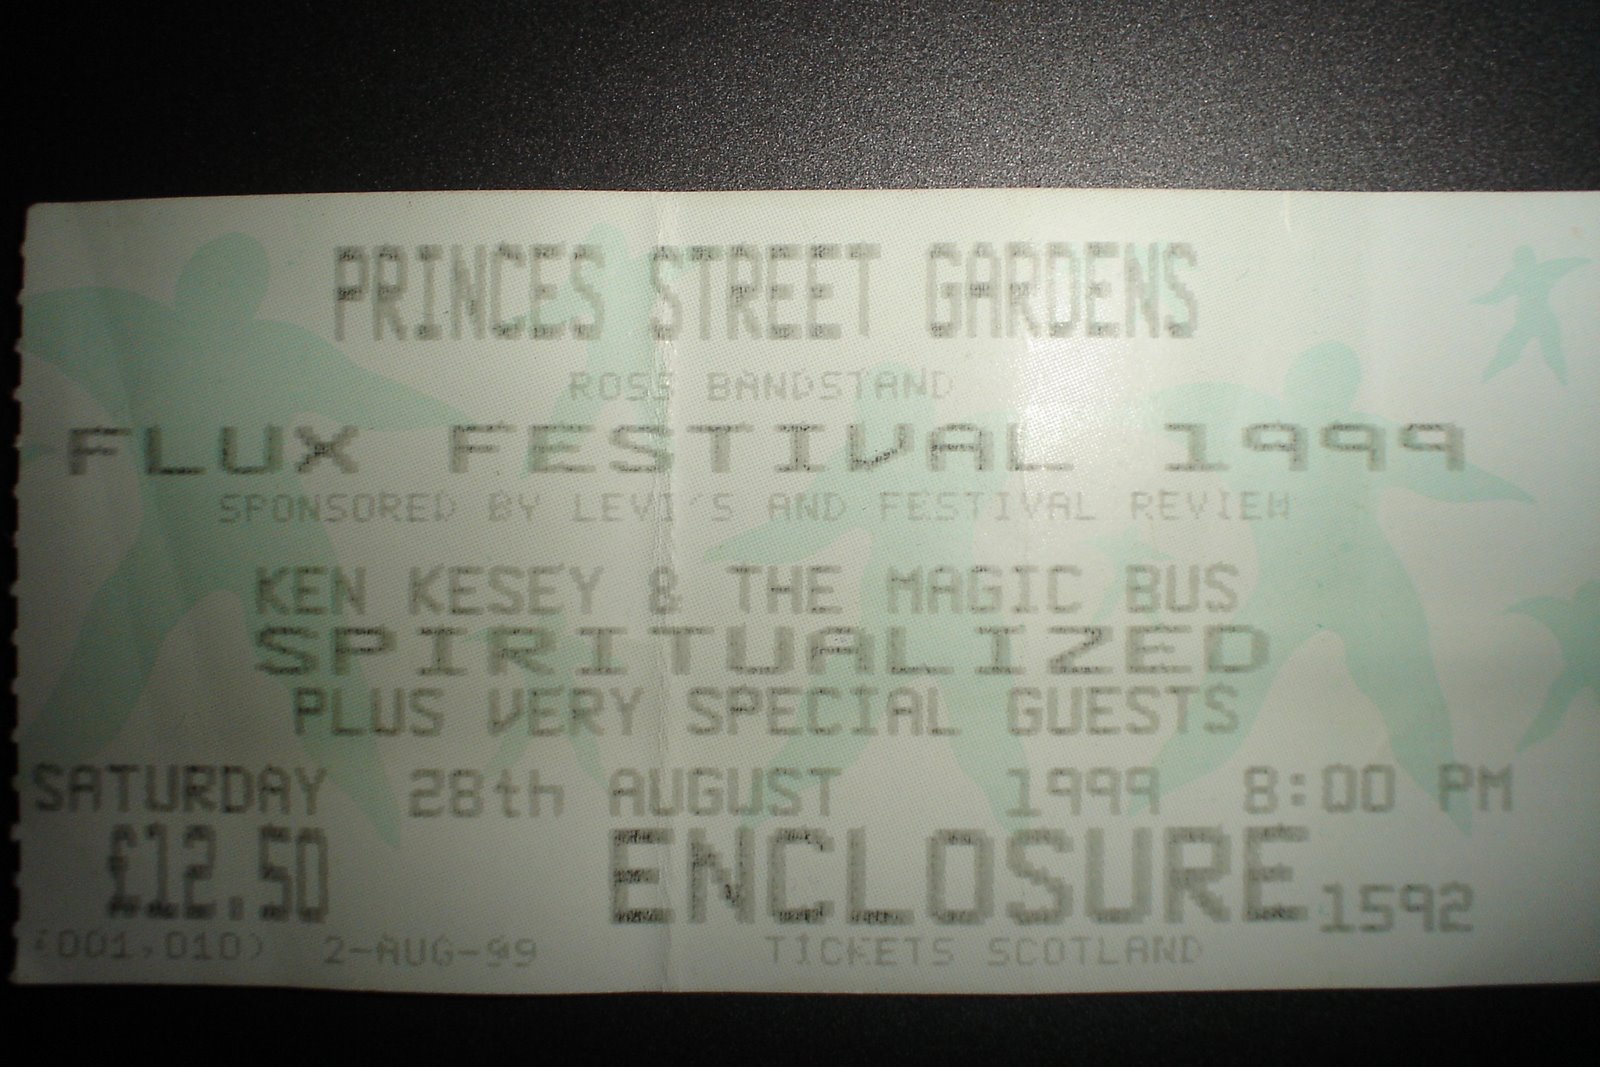 [spiritualized-queens+hall+edinburgh-28th+august+1999-ticket.JPG]